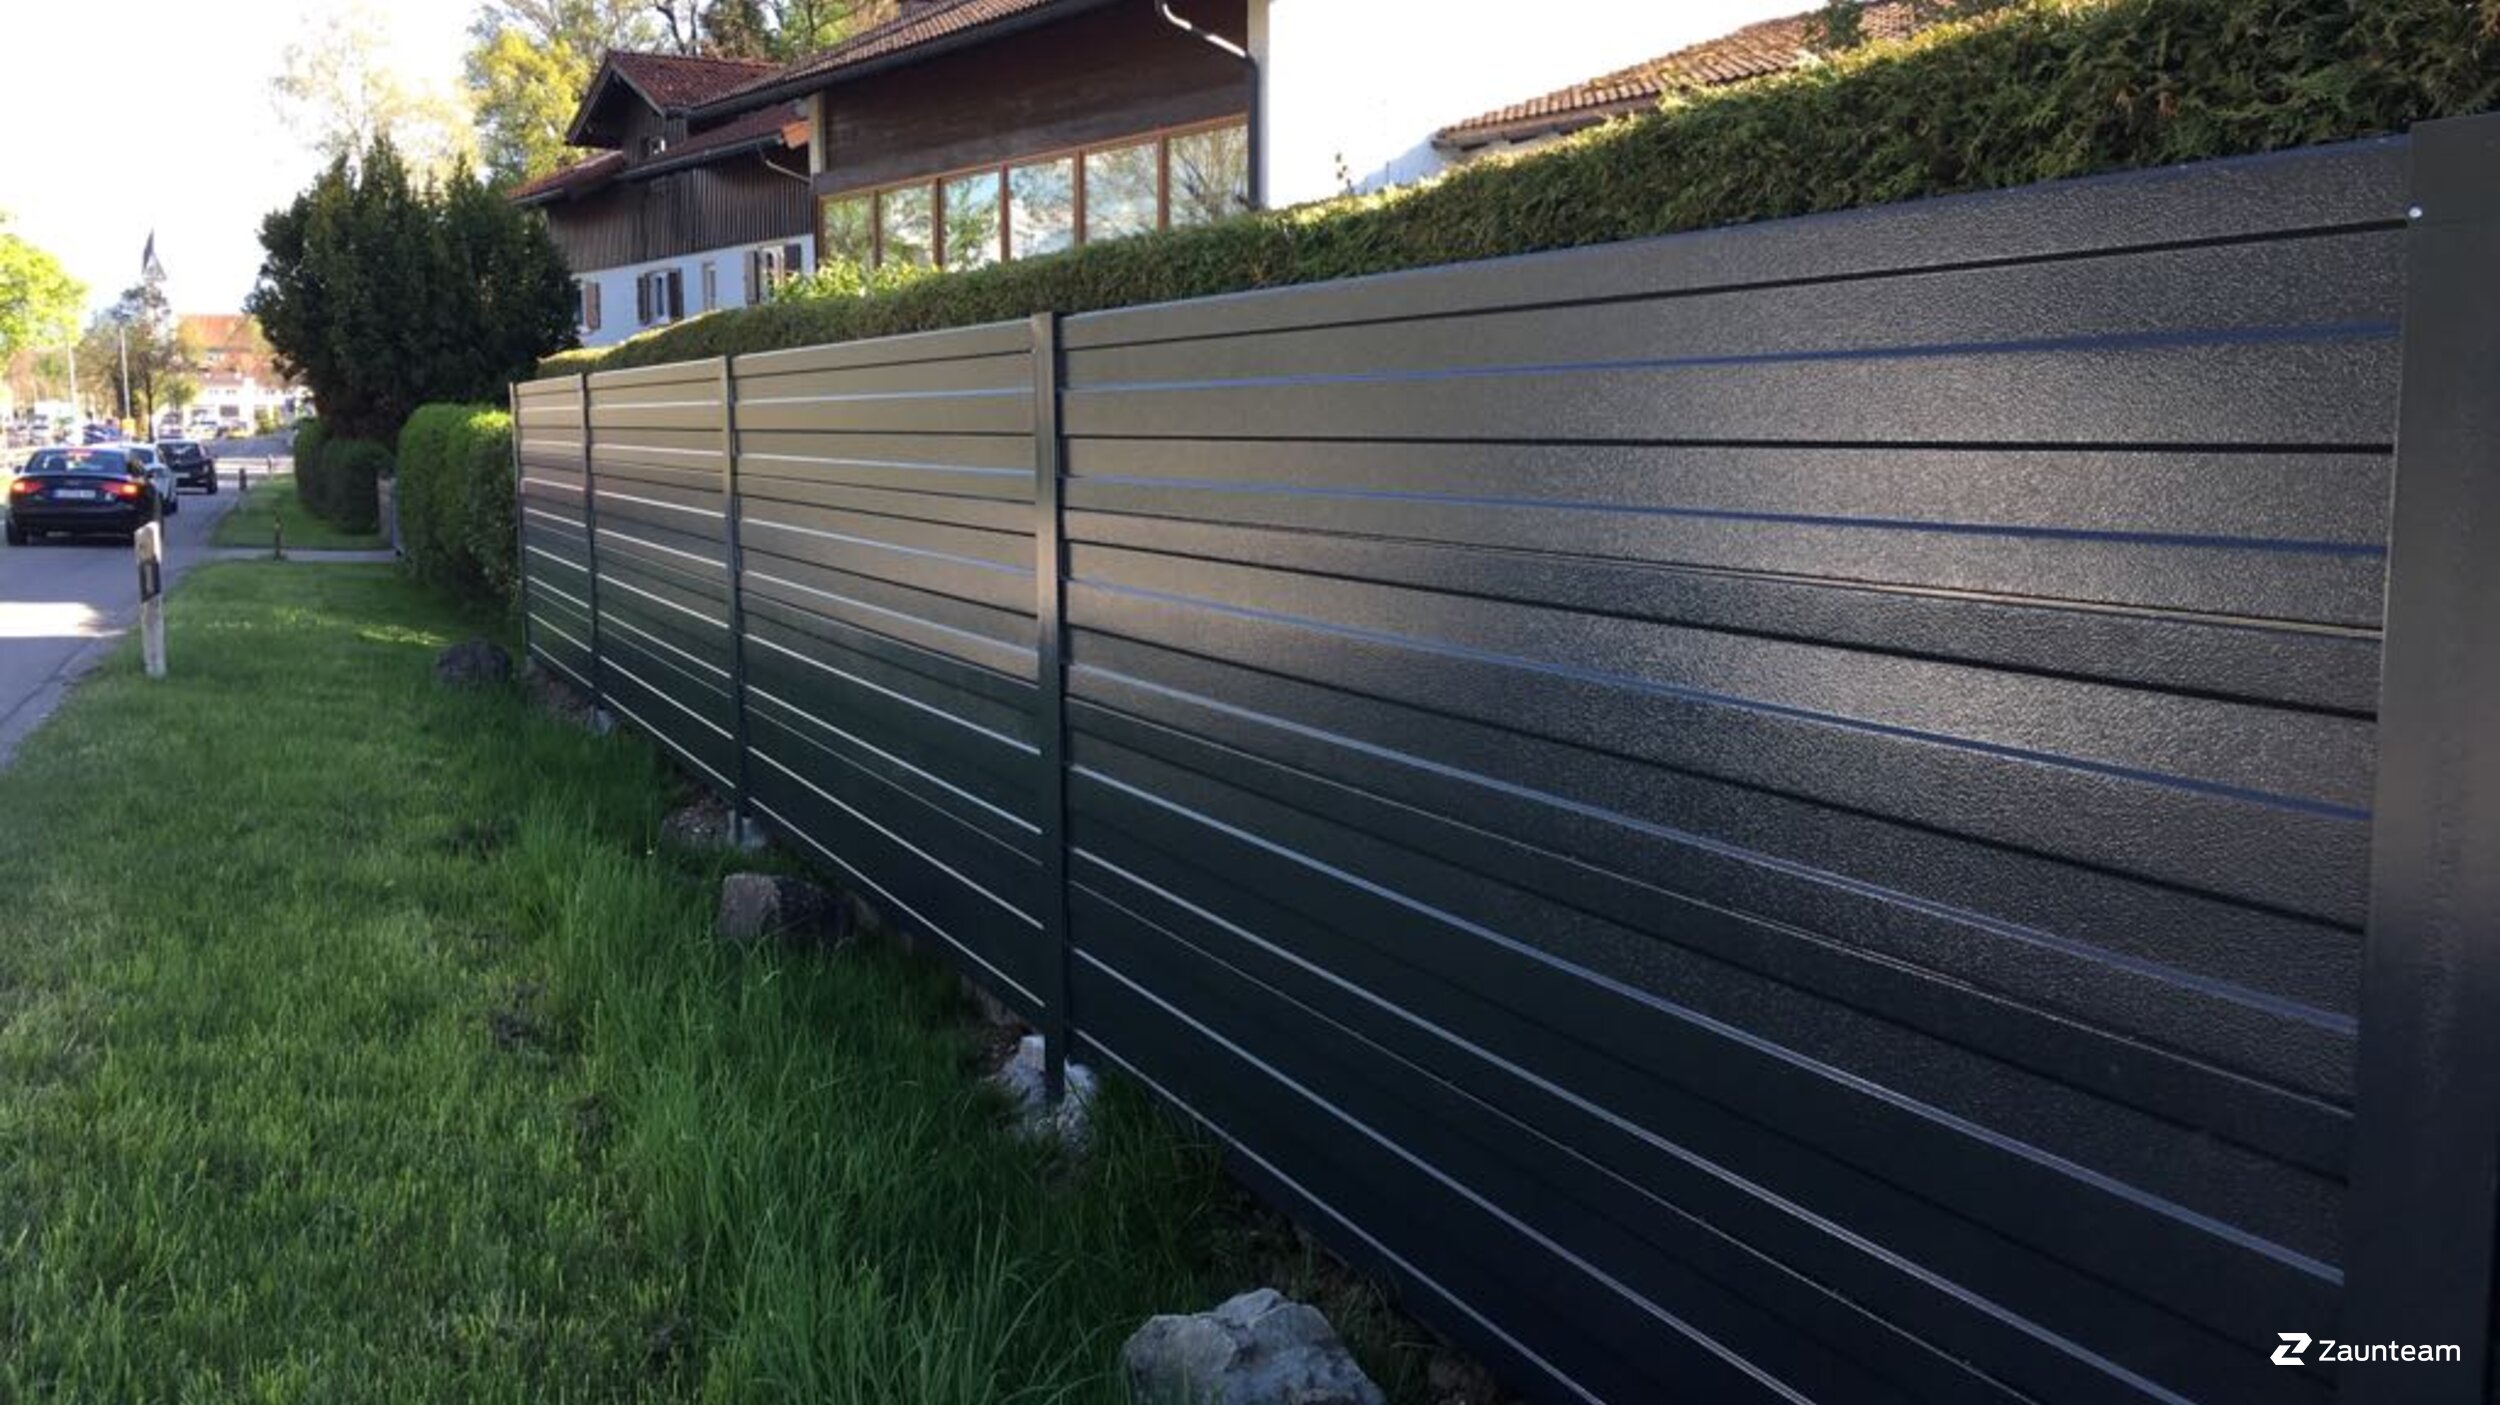 Clôture anti-bruit de 2017 à 87544 Blaichach Allemagne de Zaunteam Allgäu.